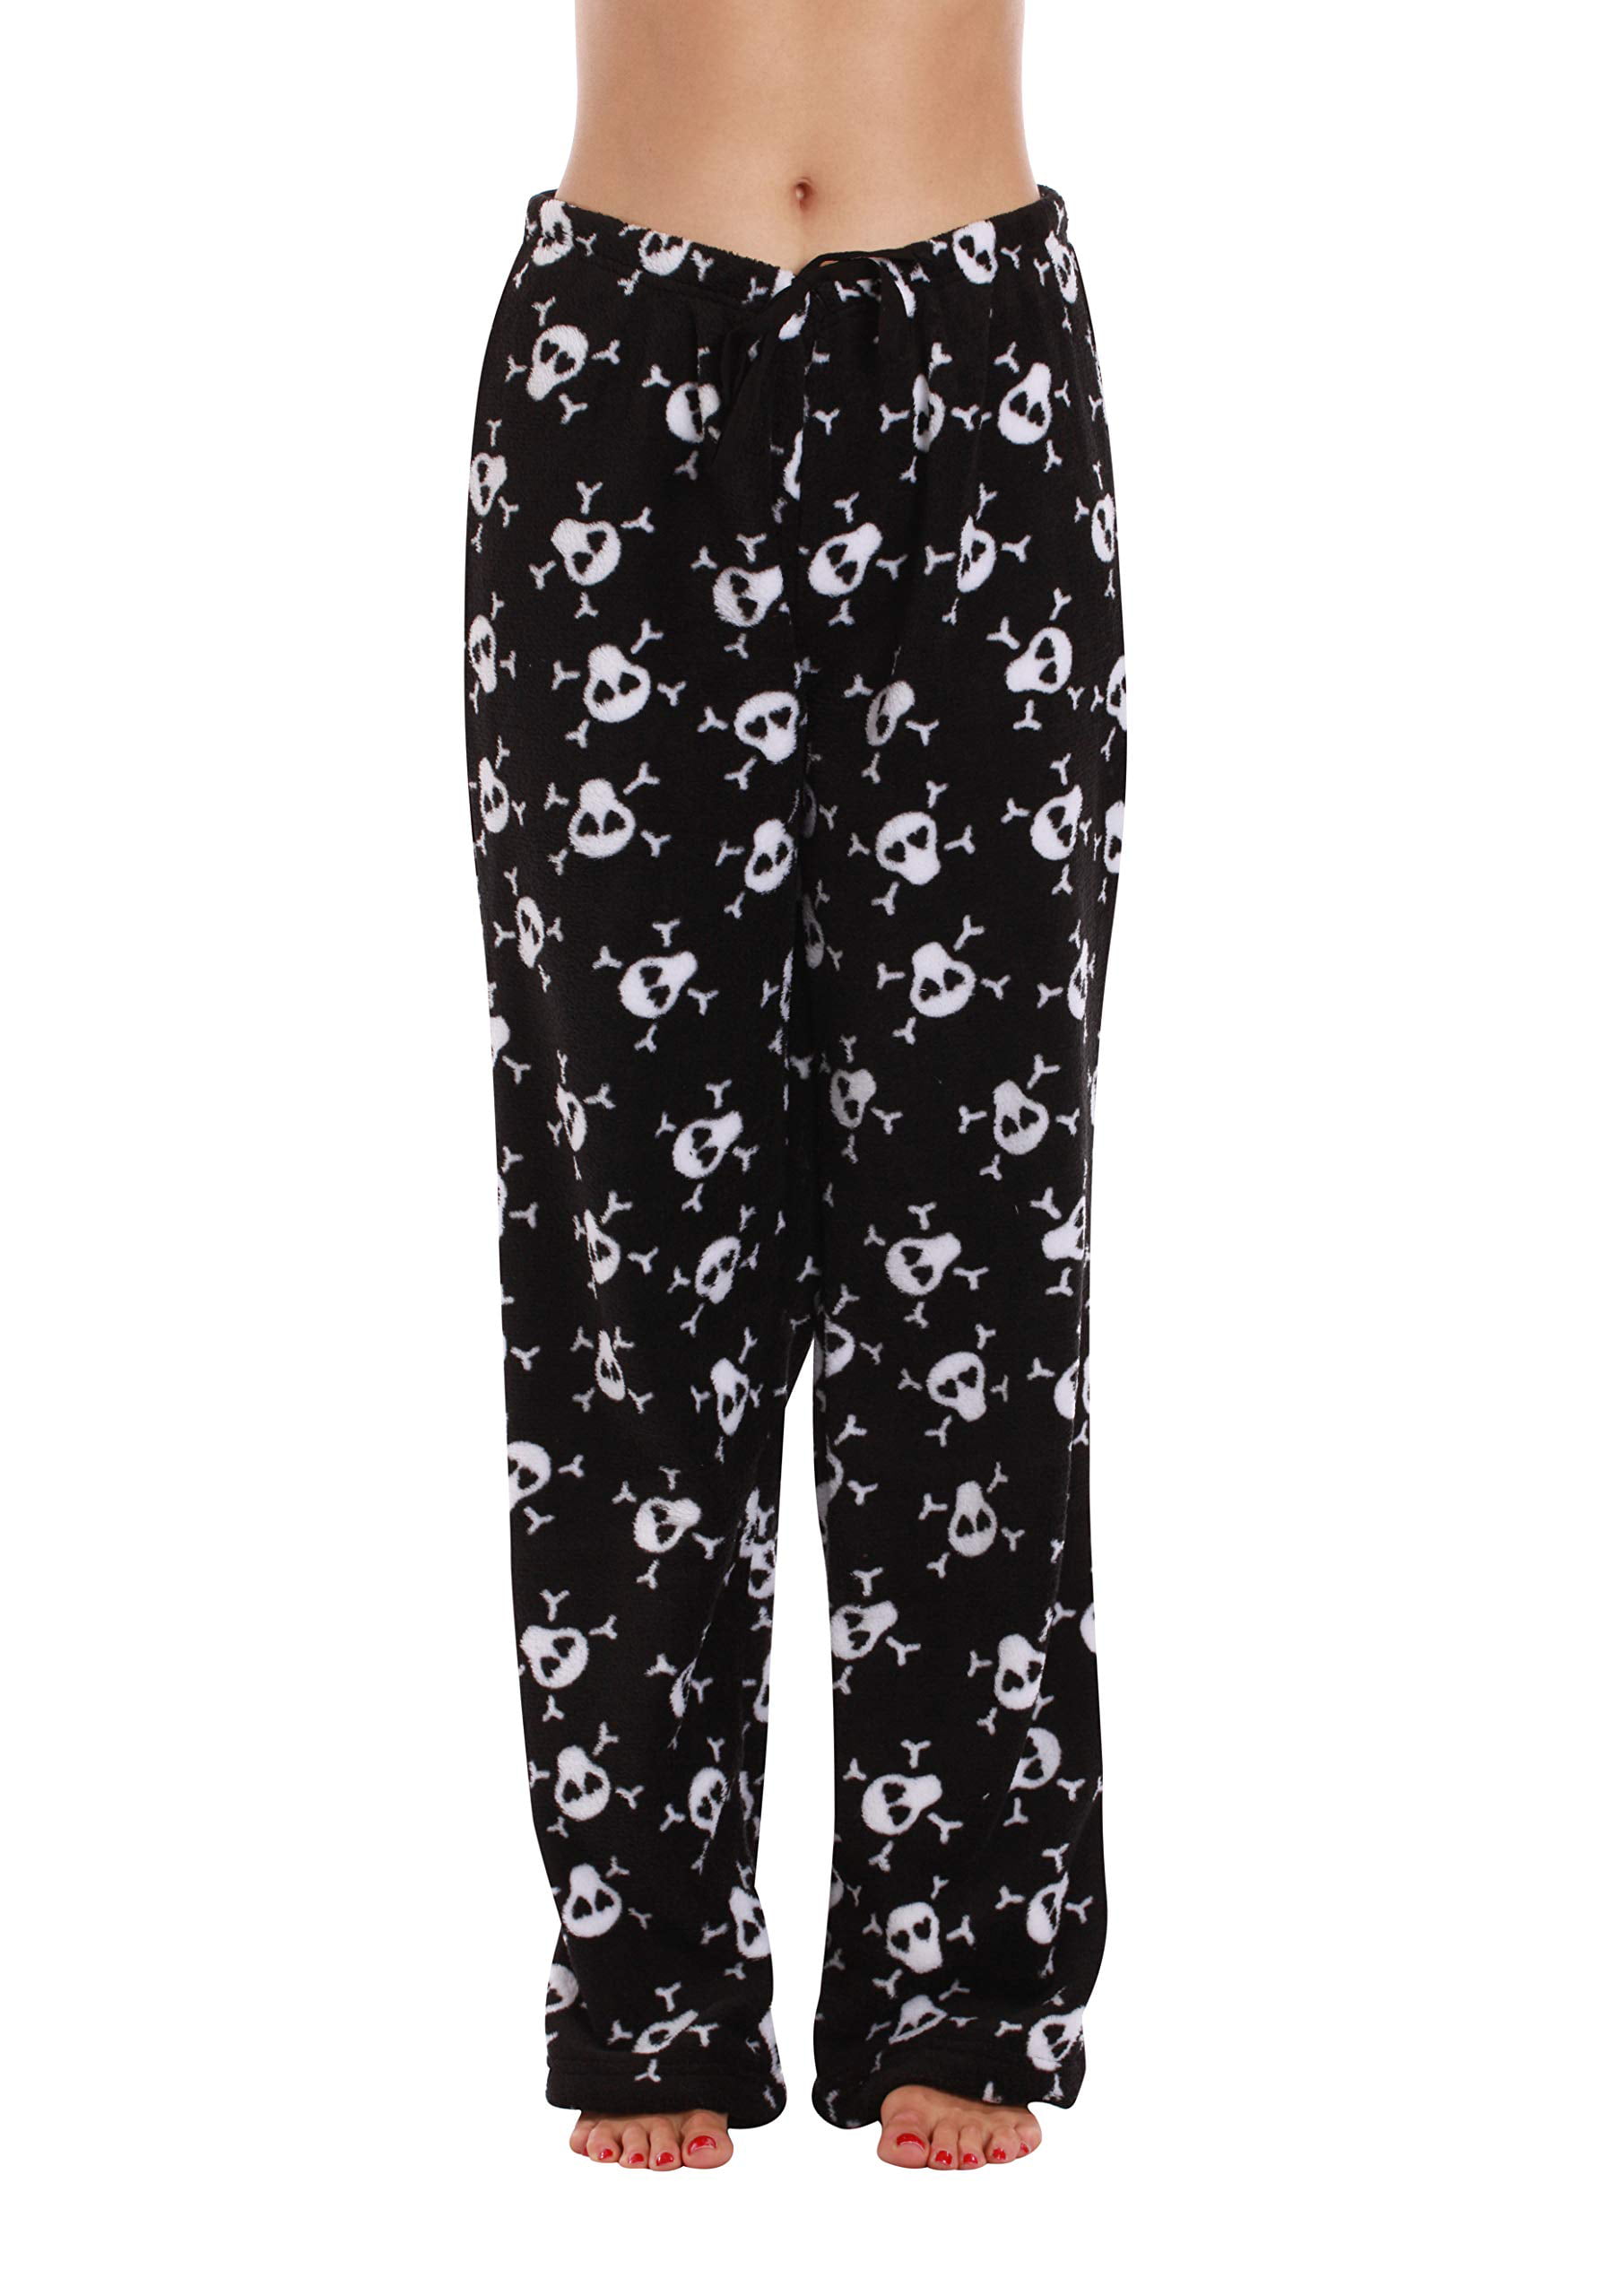 Just Love Women's Plush Pajama Pants - Cozy Lounge Sleepwear (Black - Skull and Crossbones, 1X)